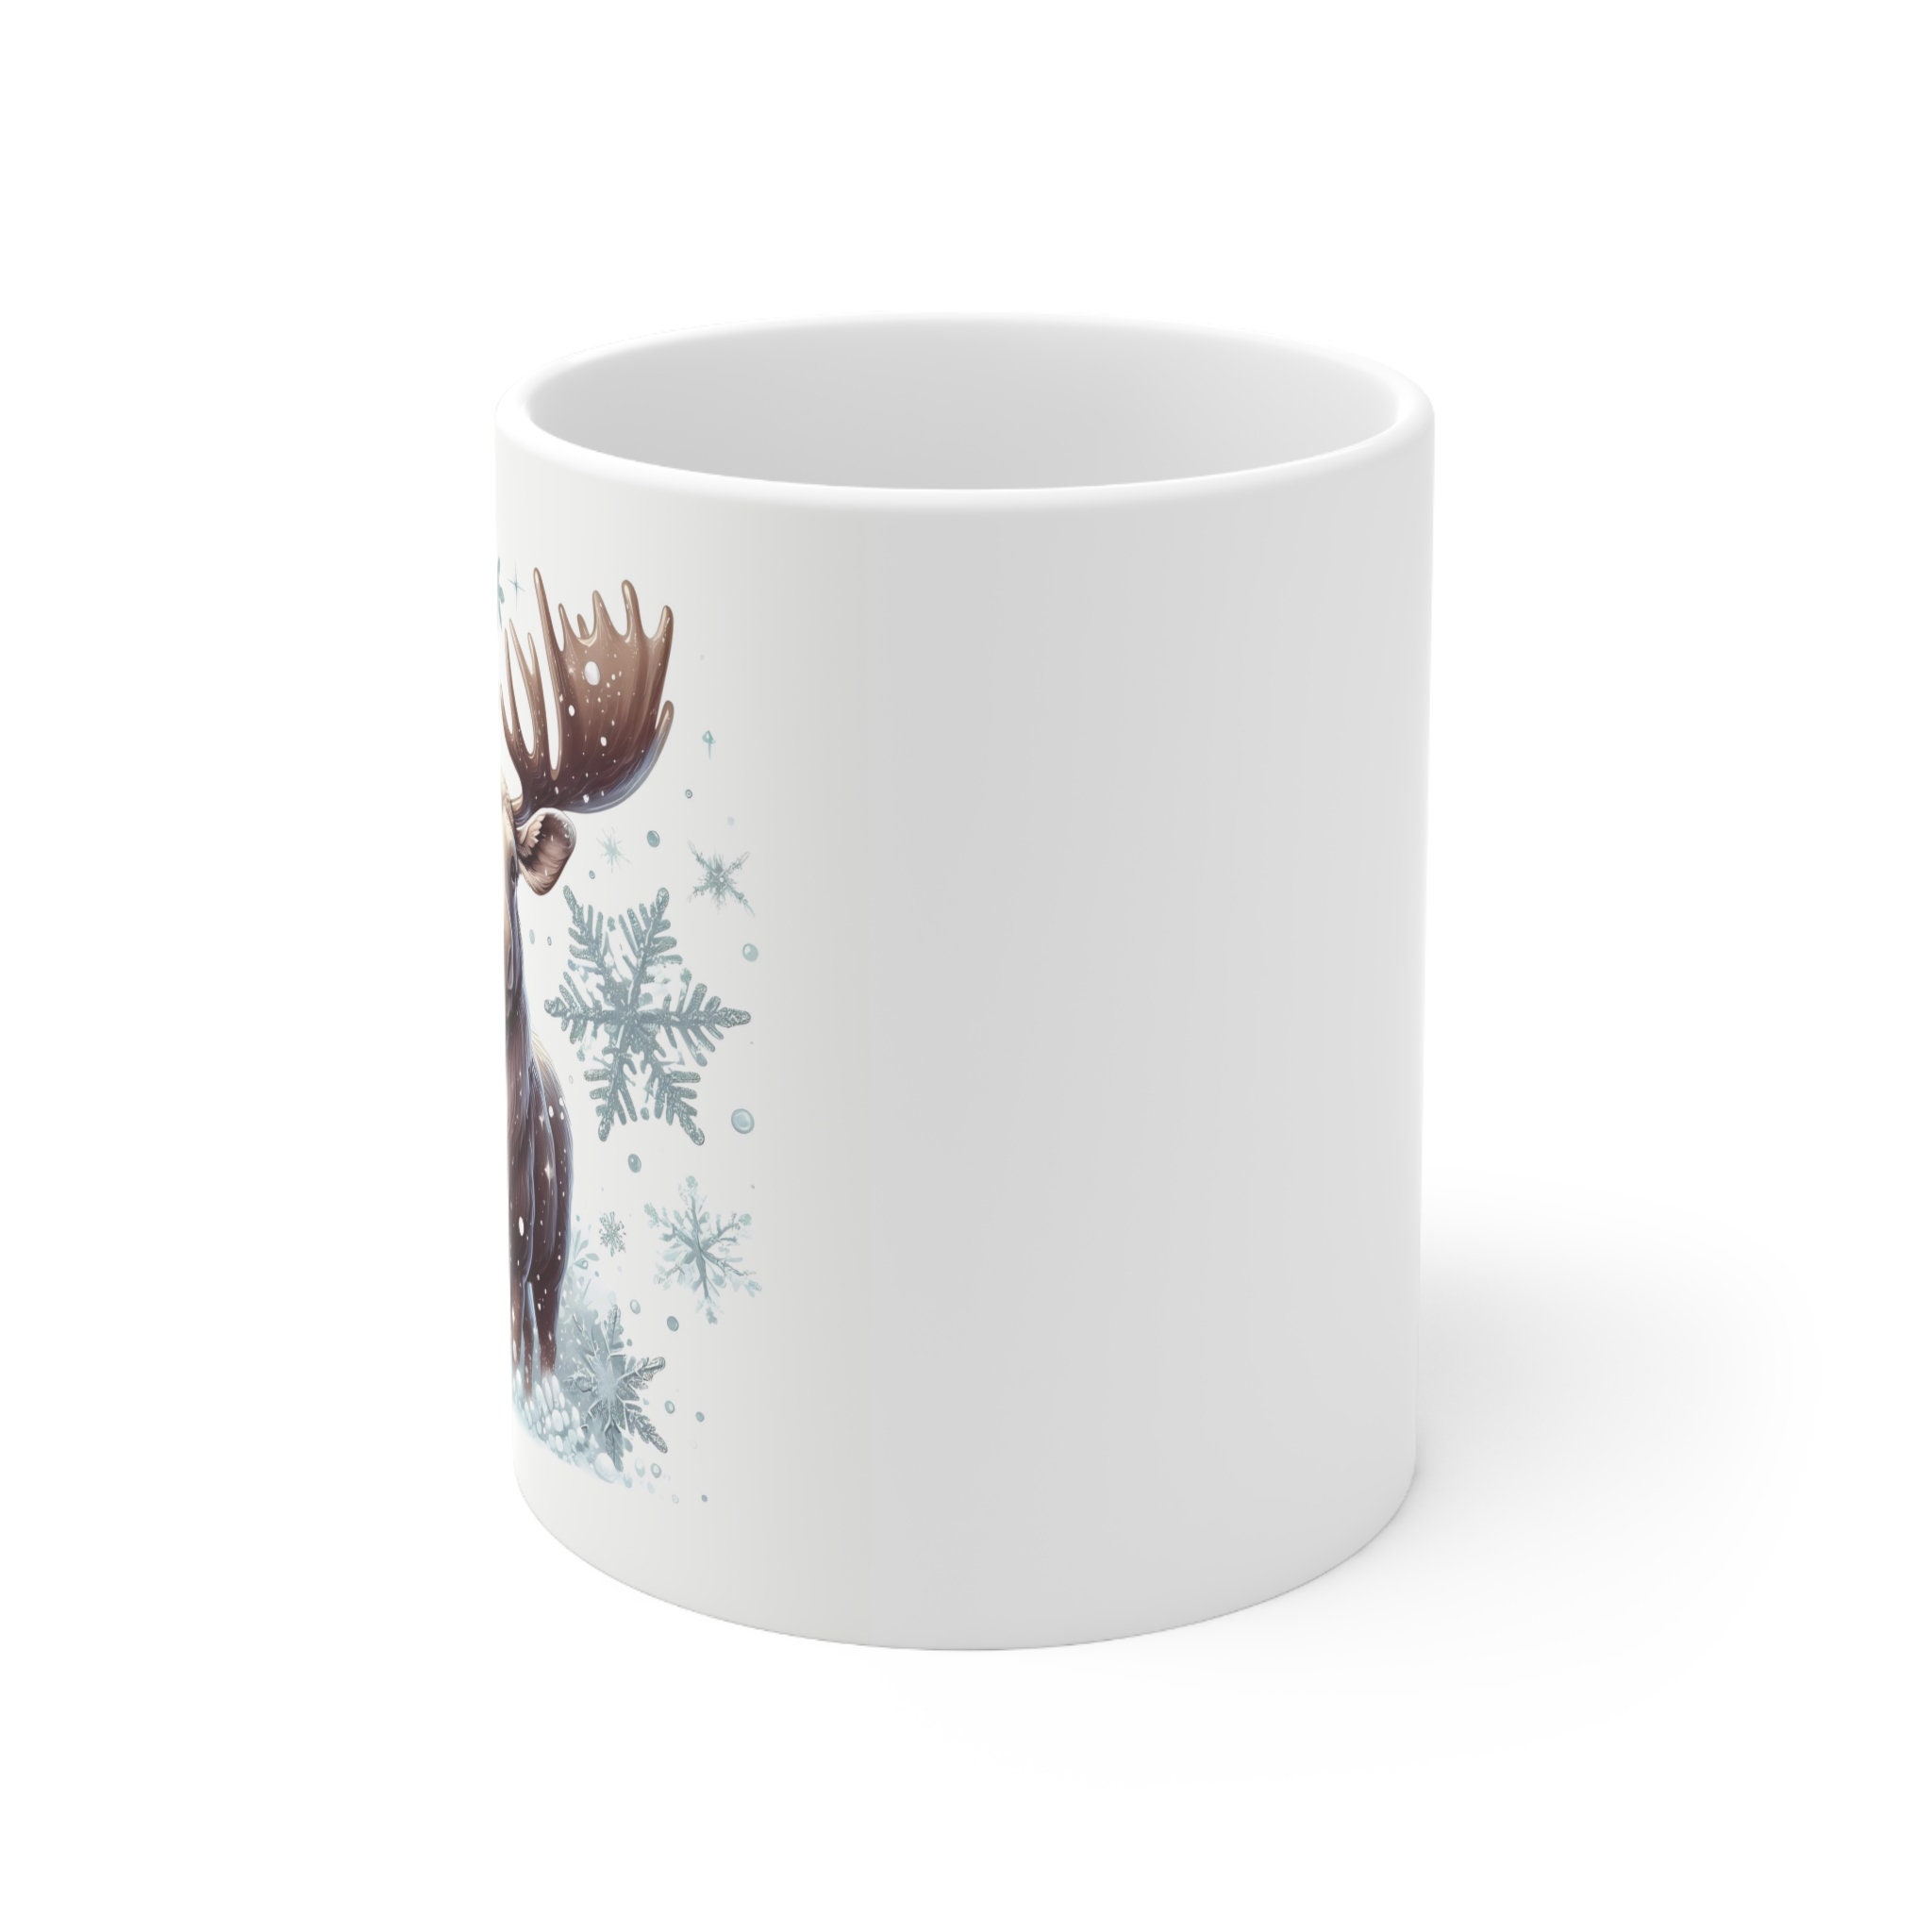 Stay Cozy Amleth Winter Yeti Squishmallow Ceramic Mug 11oz 